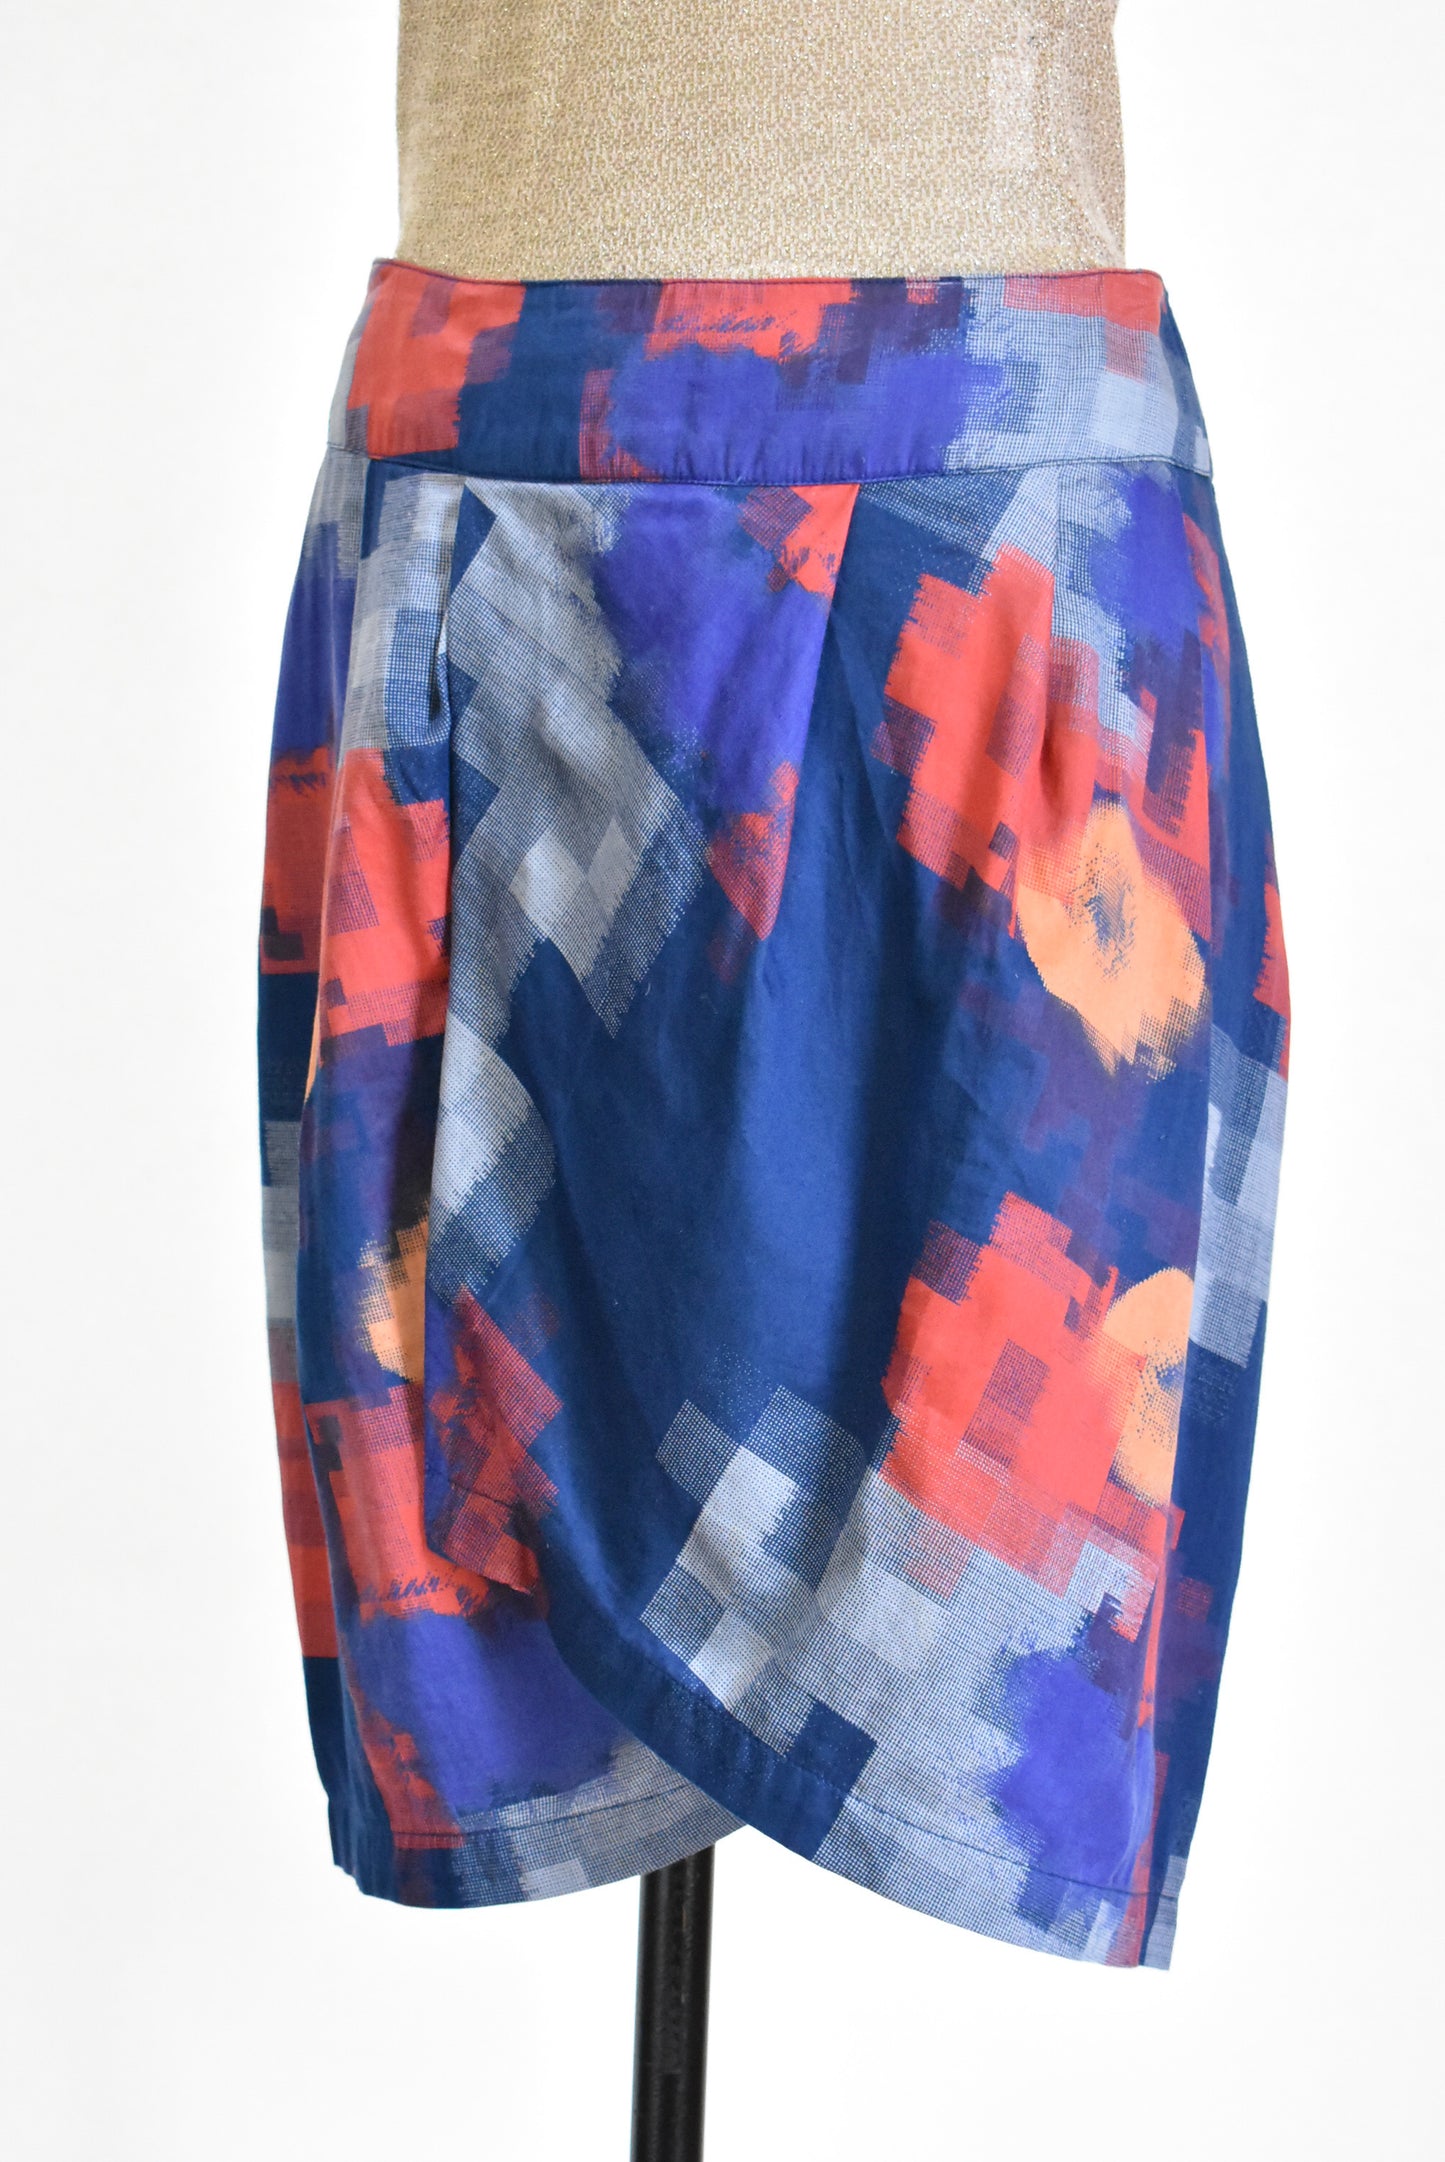 Fatface cotton tulip skirt, 12